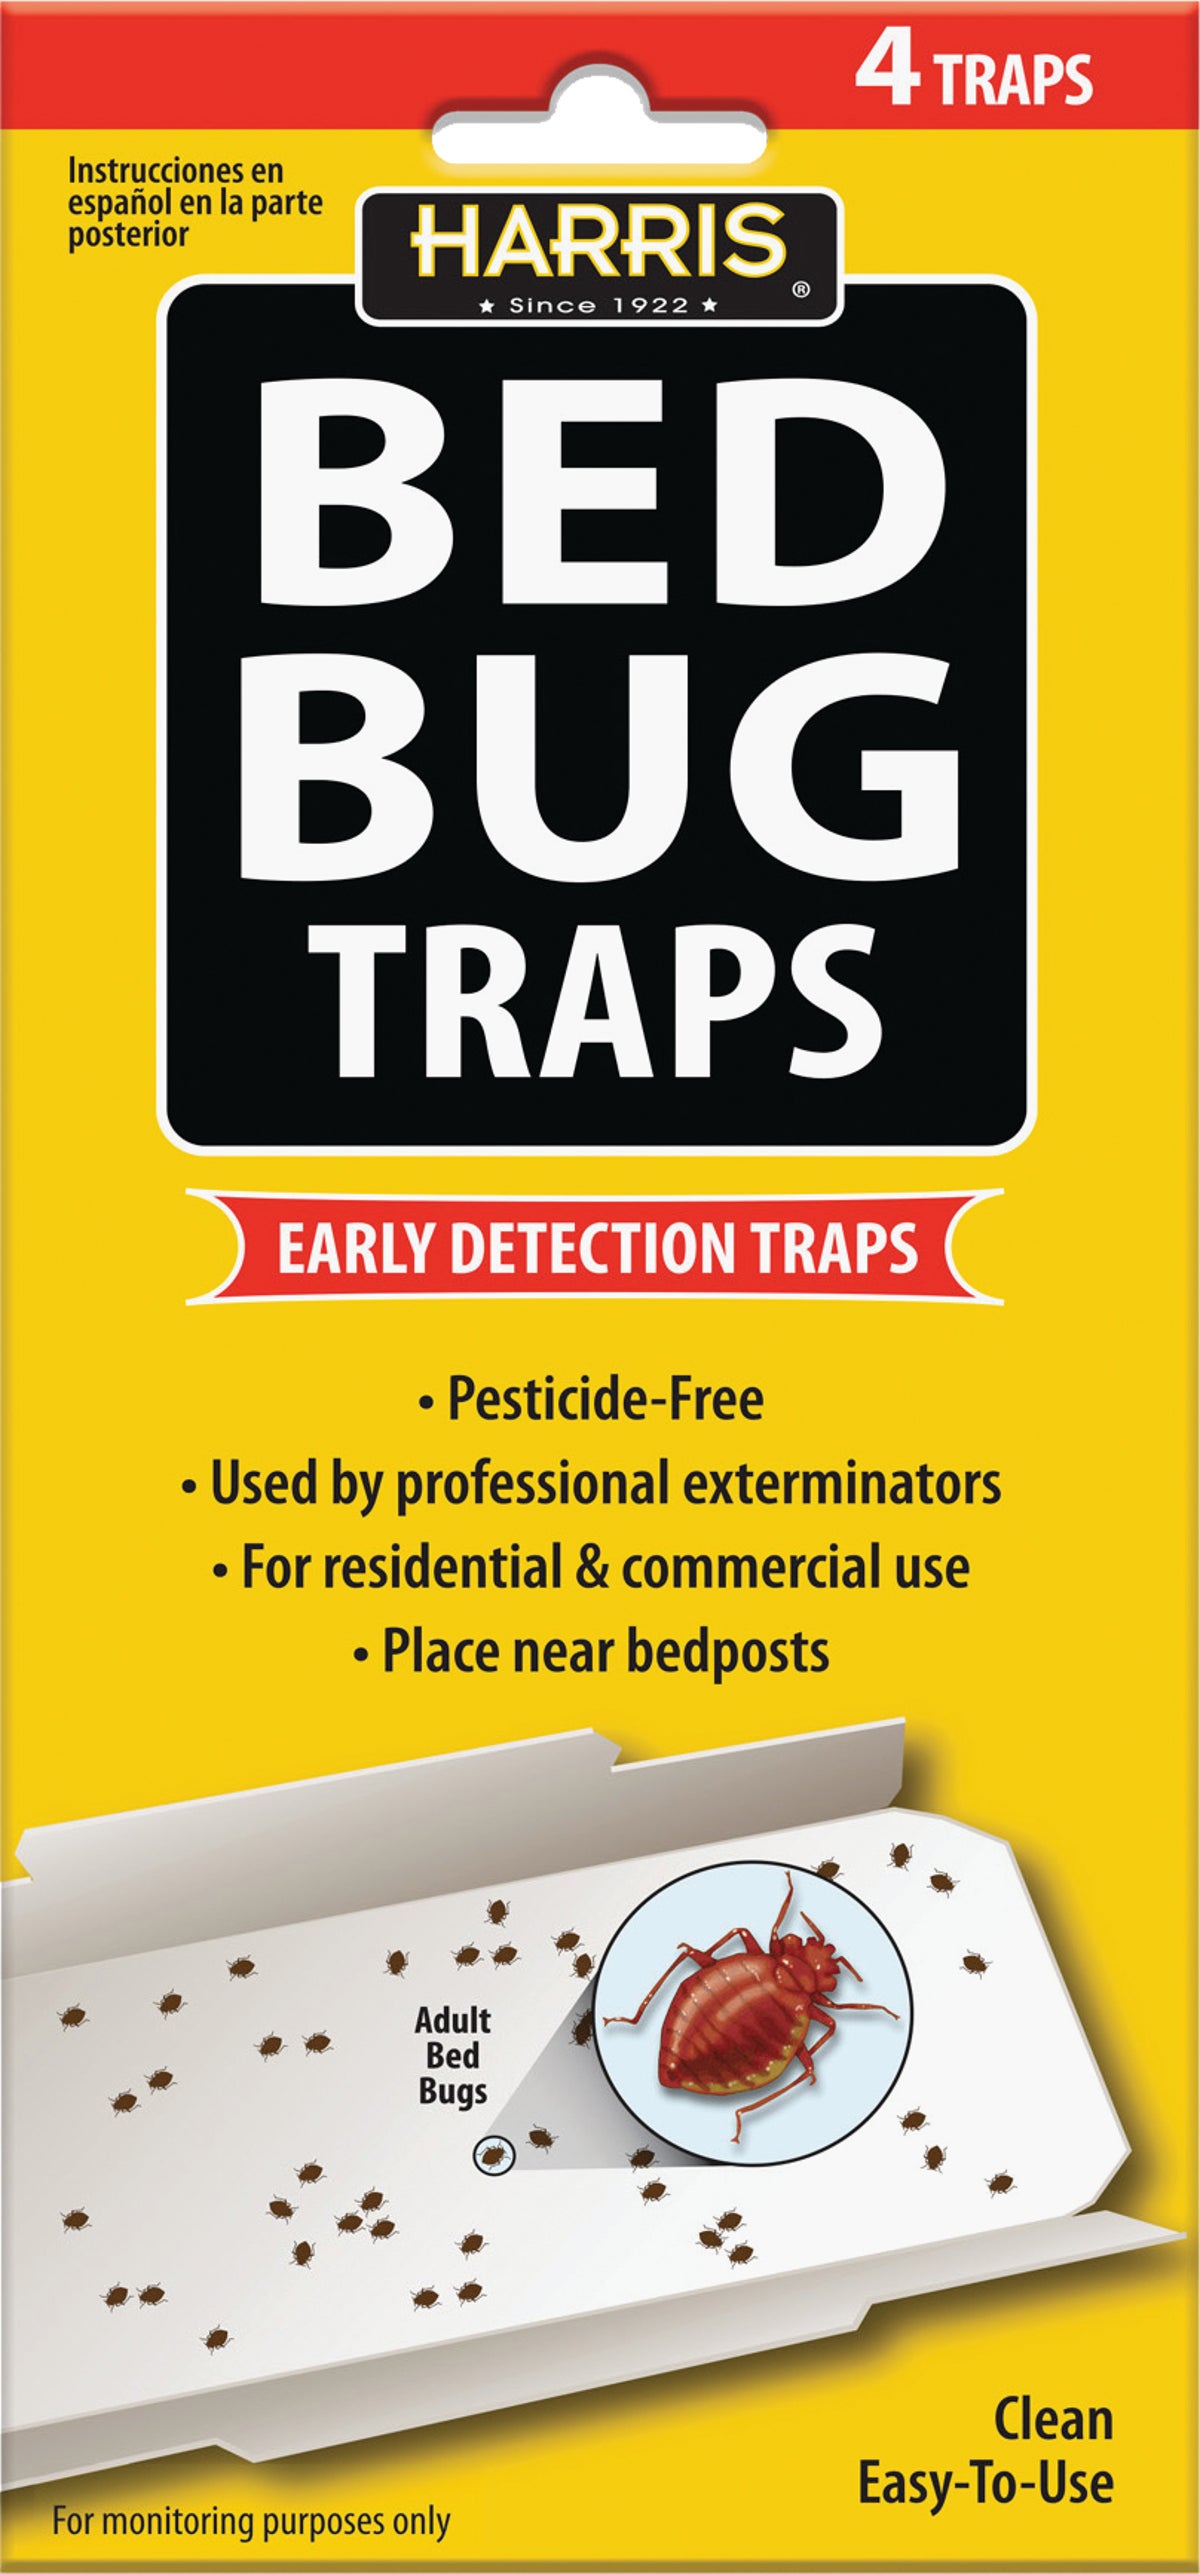 Terro Glue Clothes Moth Alert Trap (2-Pack)